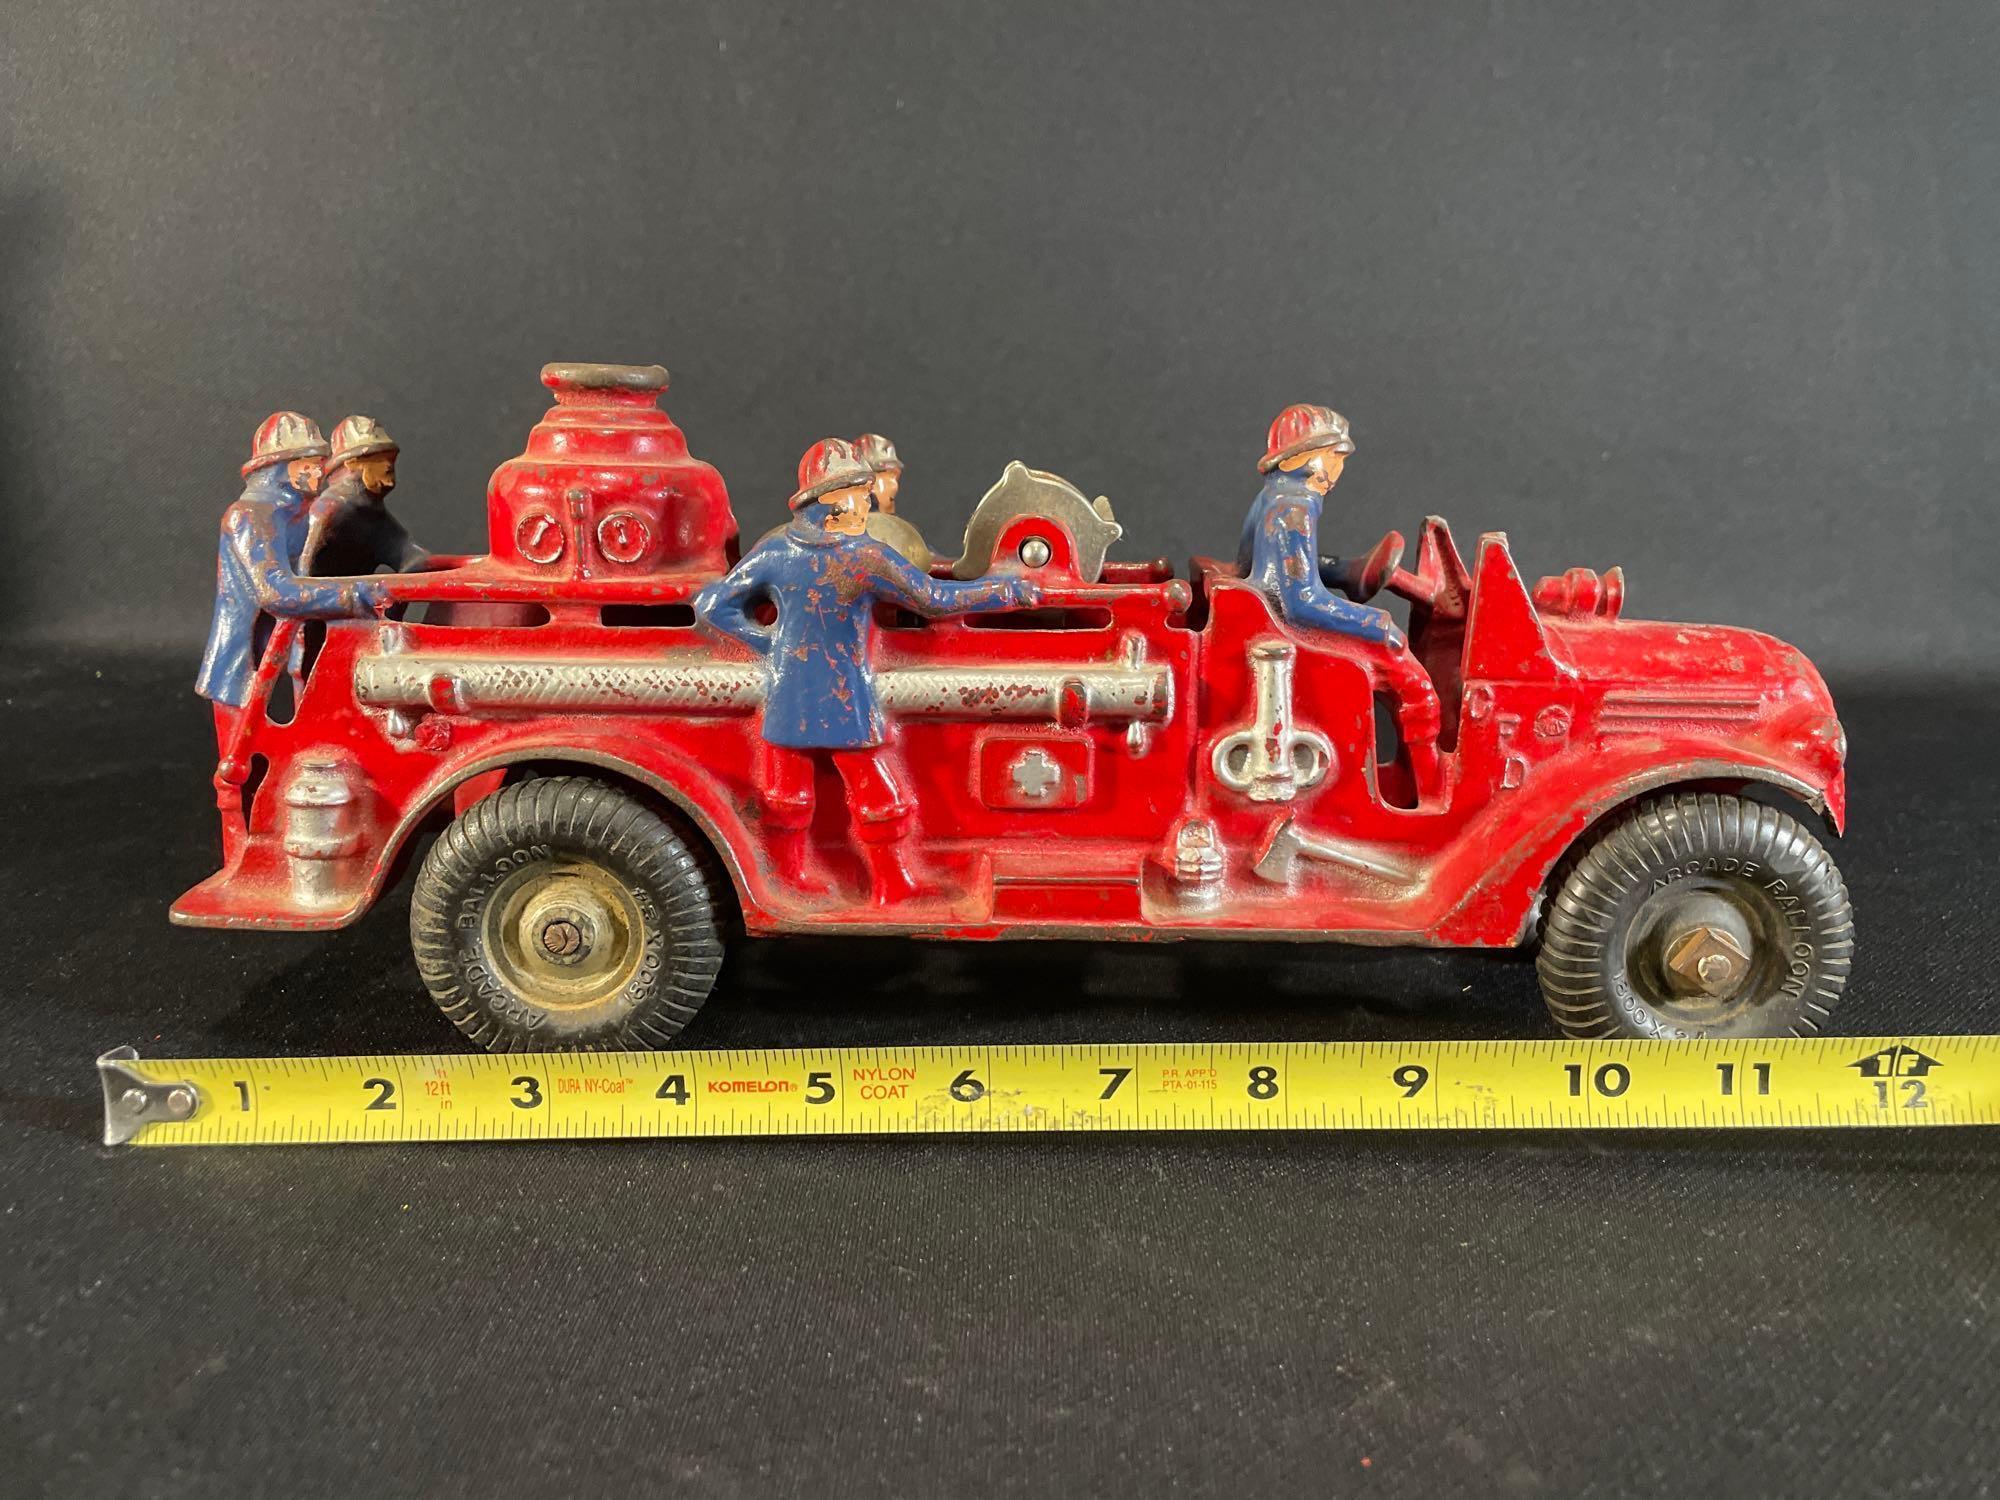 Arcade Manufacturing Company cast iron 6 rider fire engine pumper truck